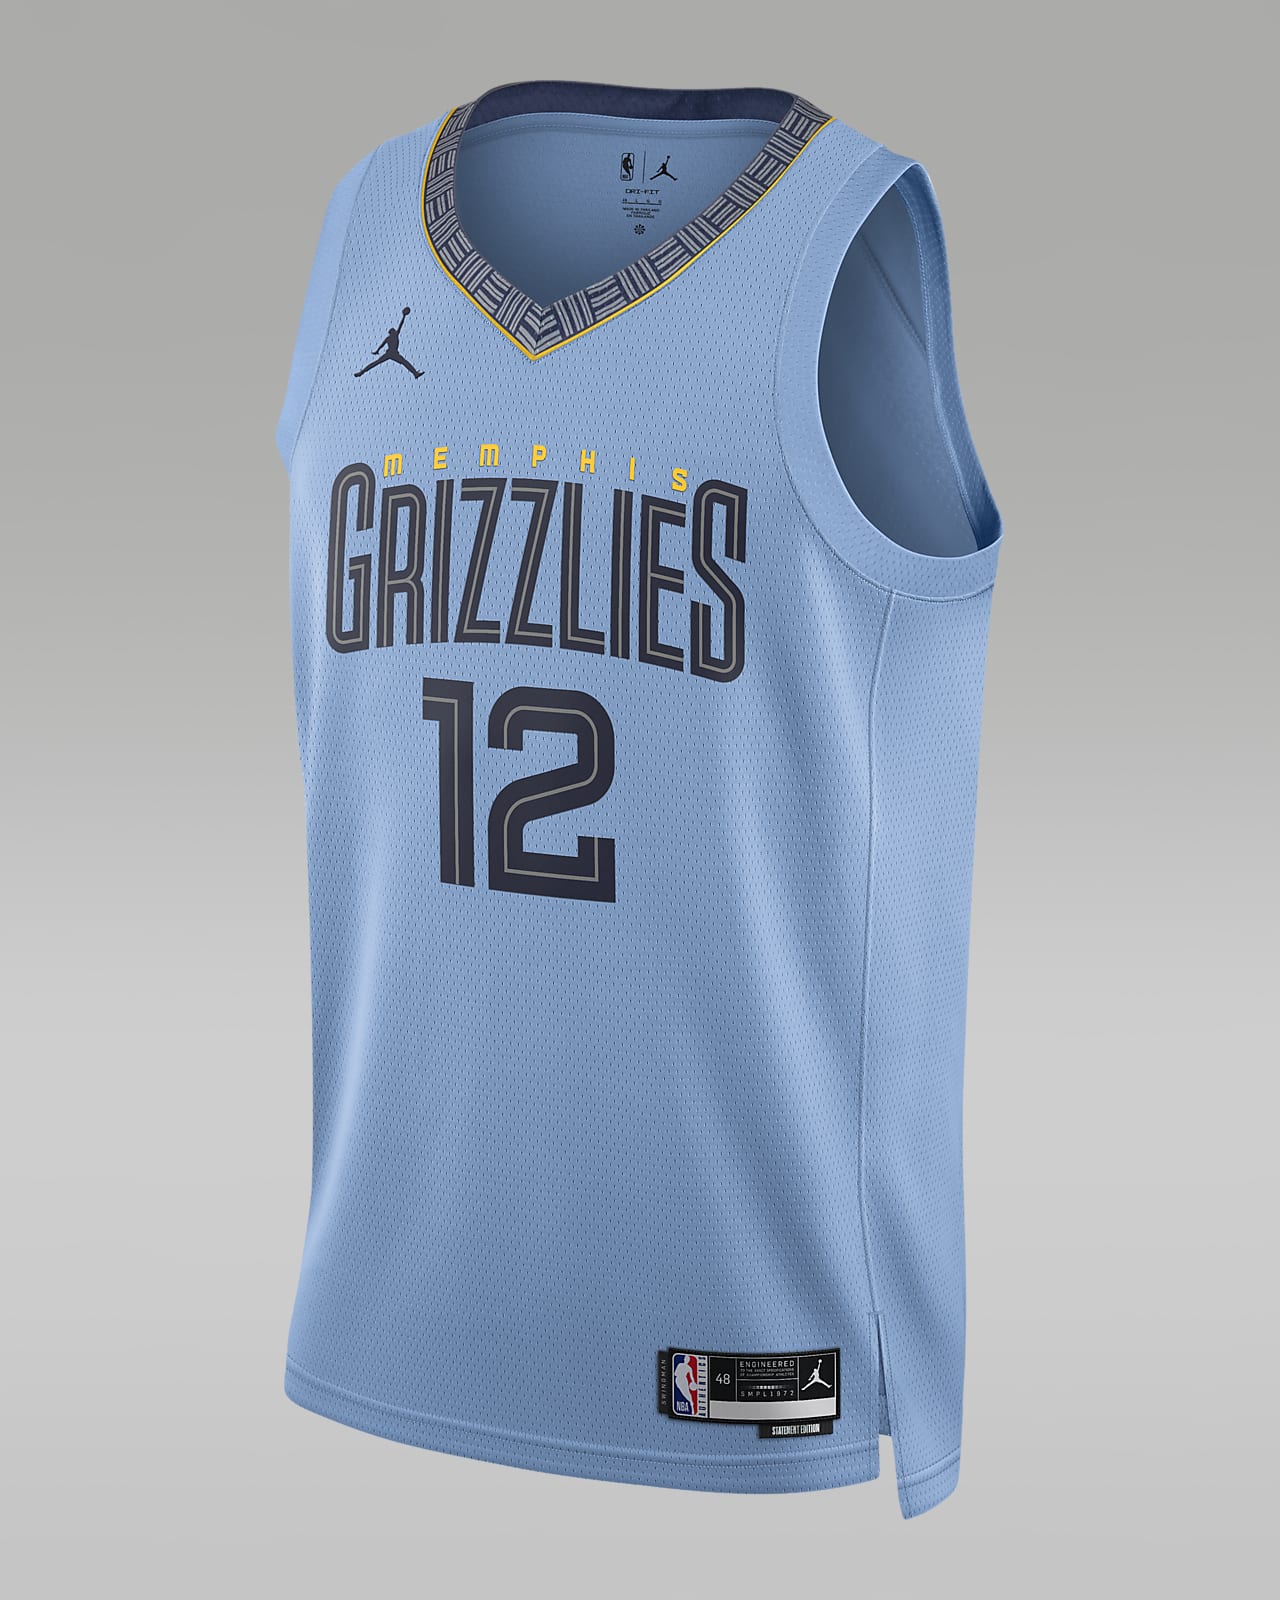 memphis grizzlies basketball uniform